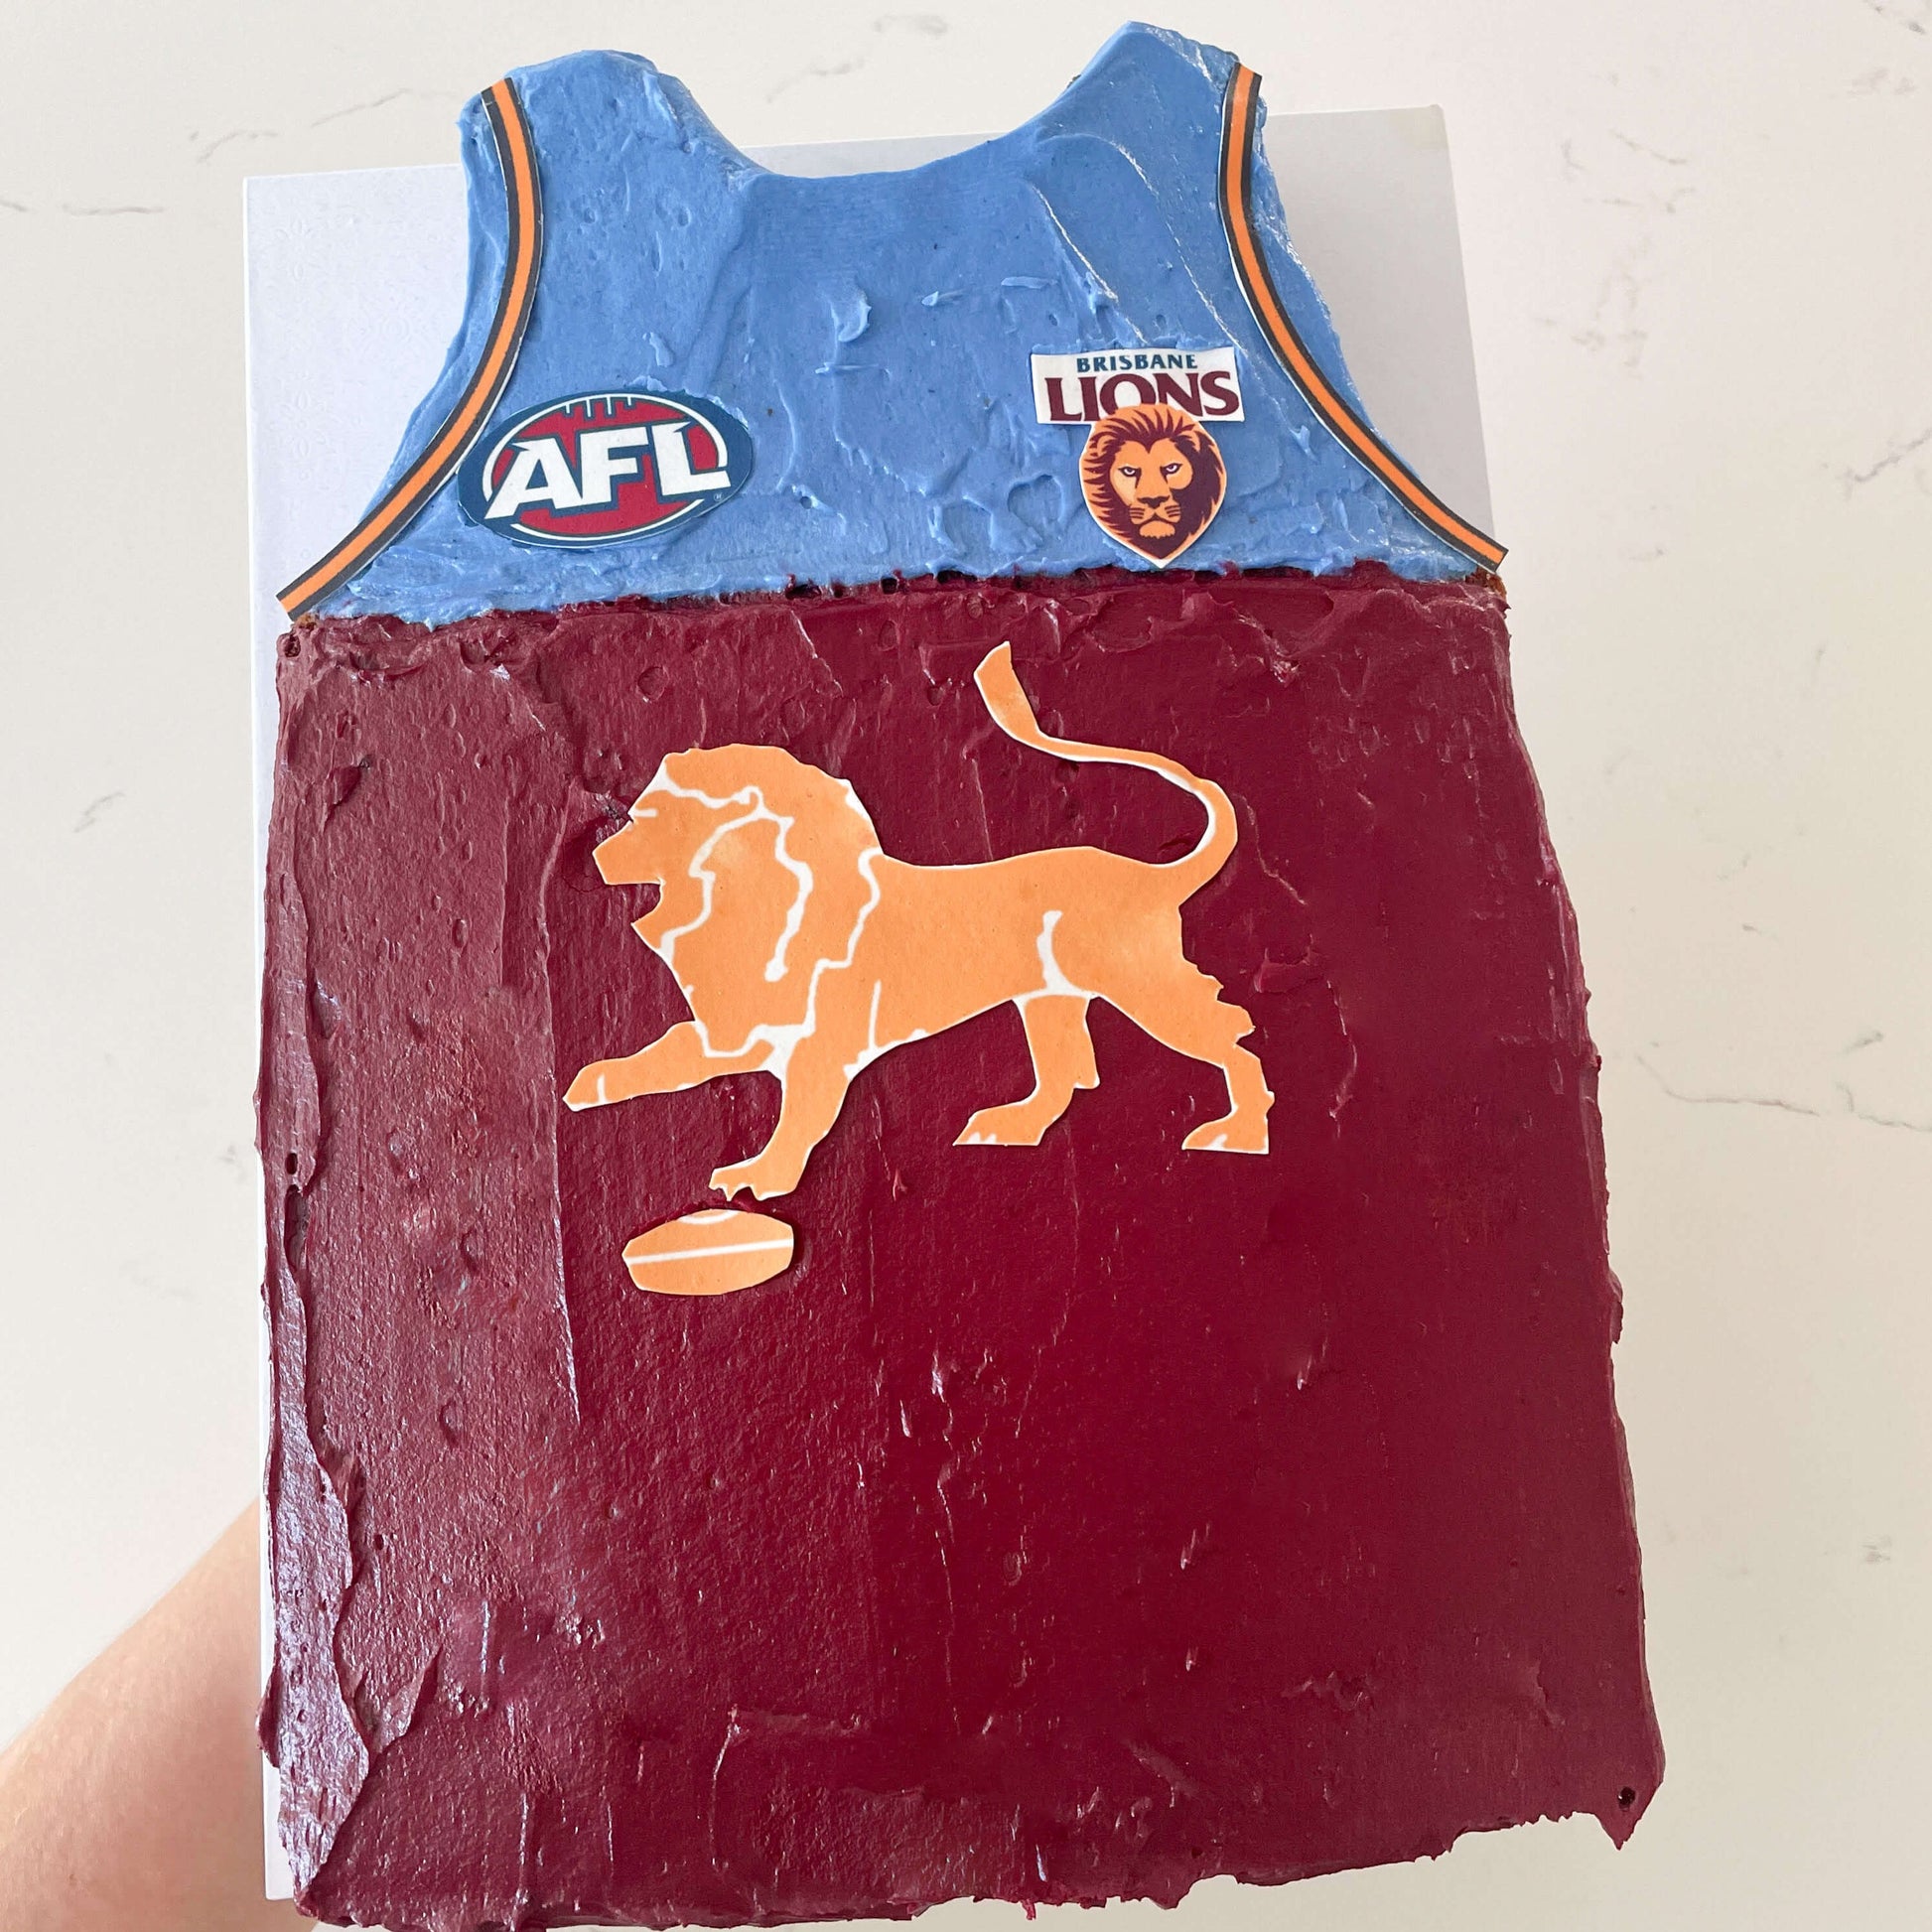 Lions Jersey Cake Kit